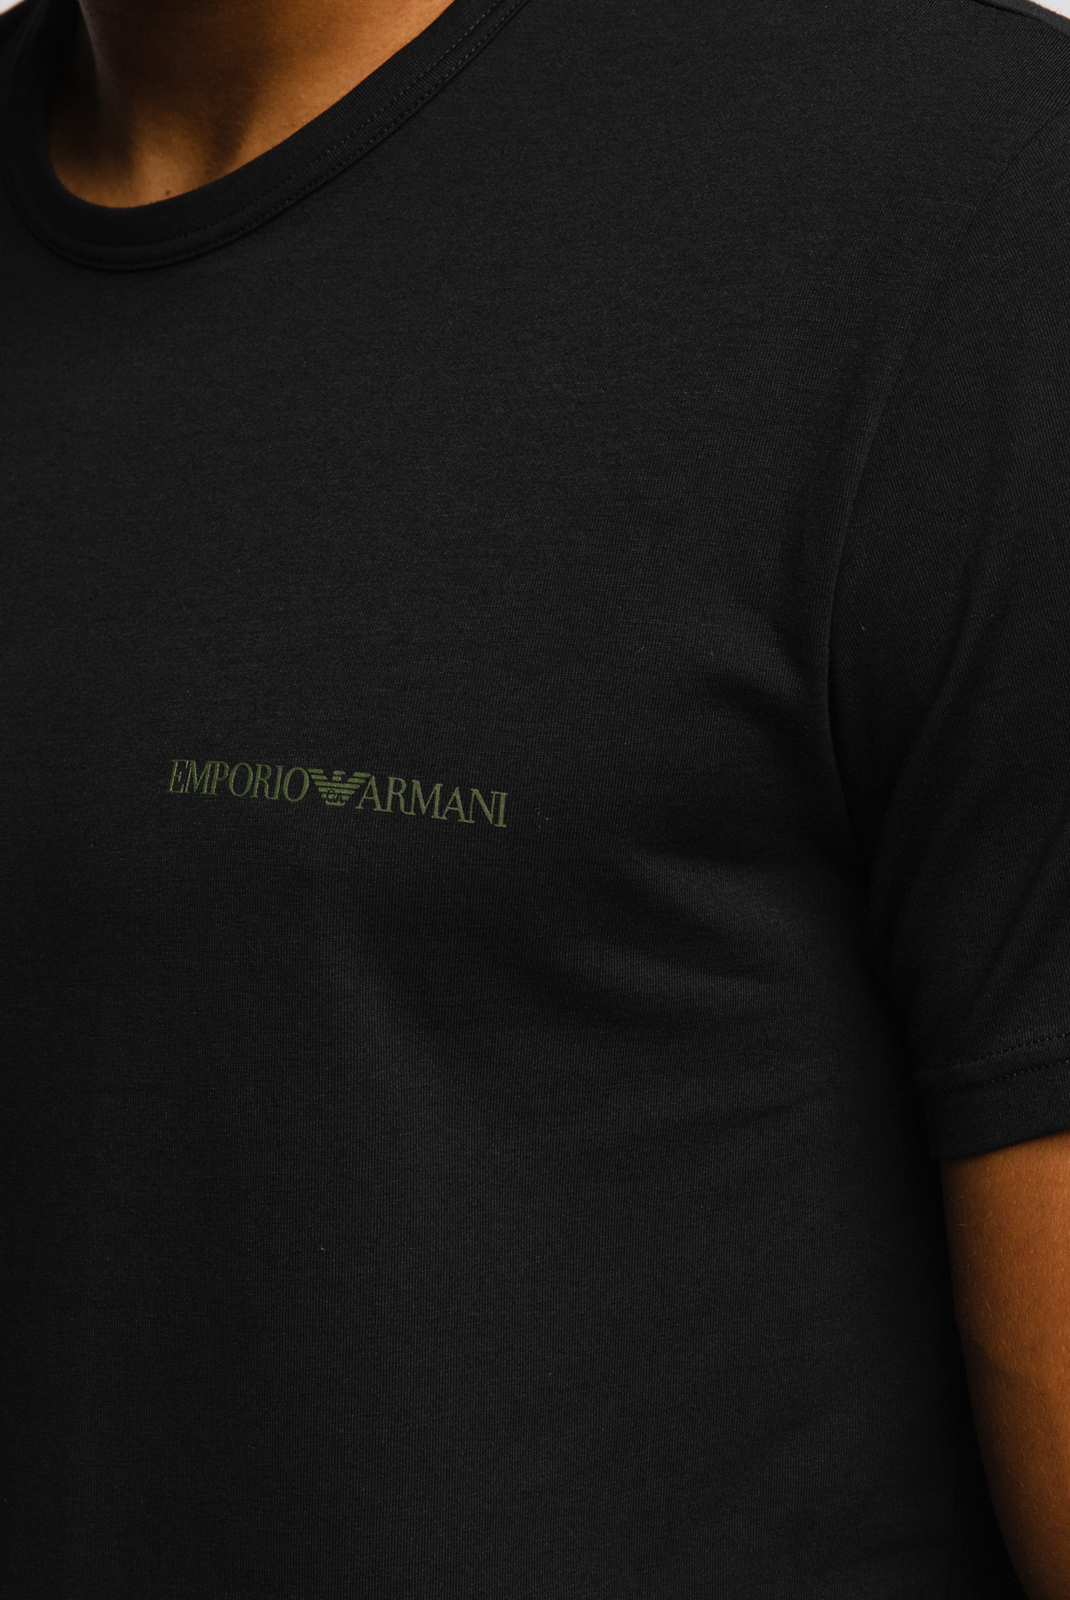 Emporio Armani Pack De 2 Tee-shirt  Noir Uni Col Rond 111267 0a717